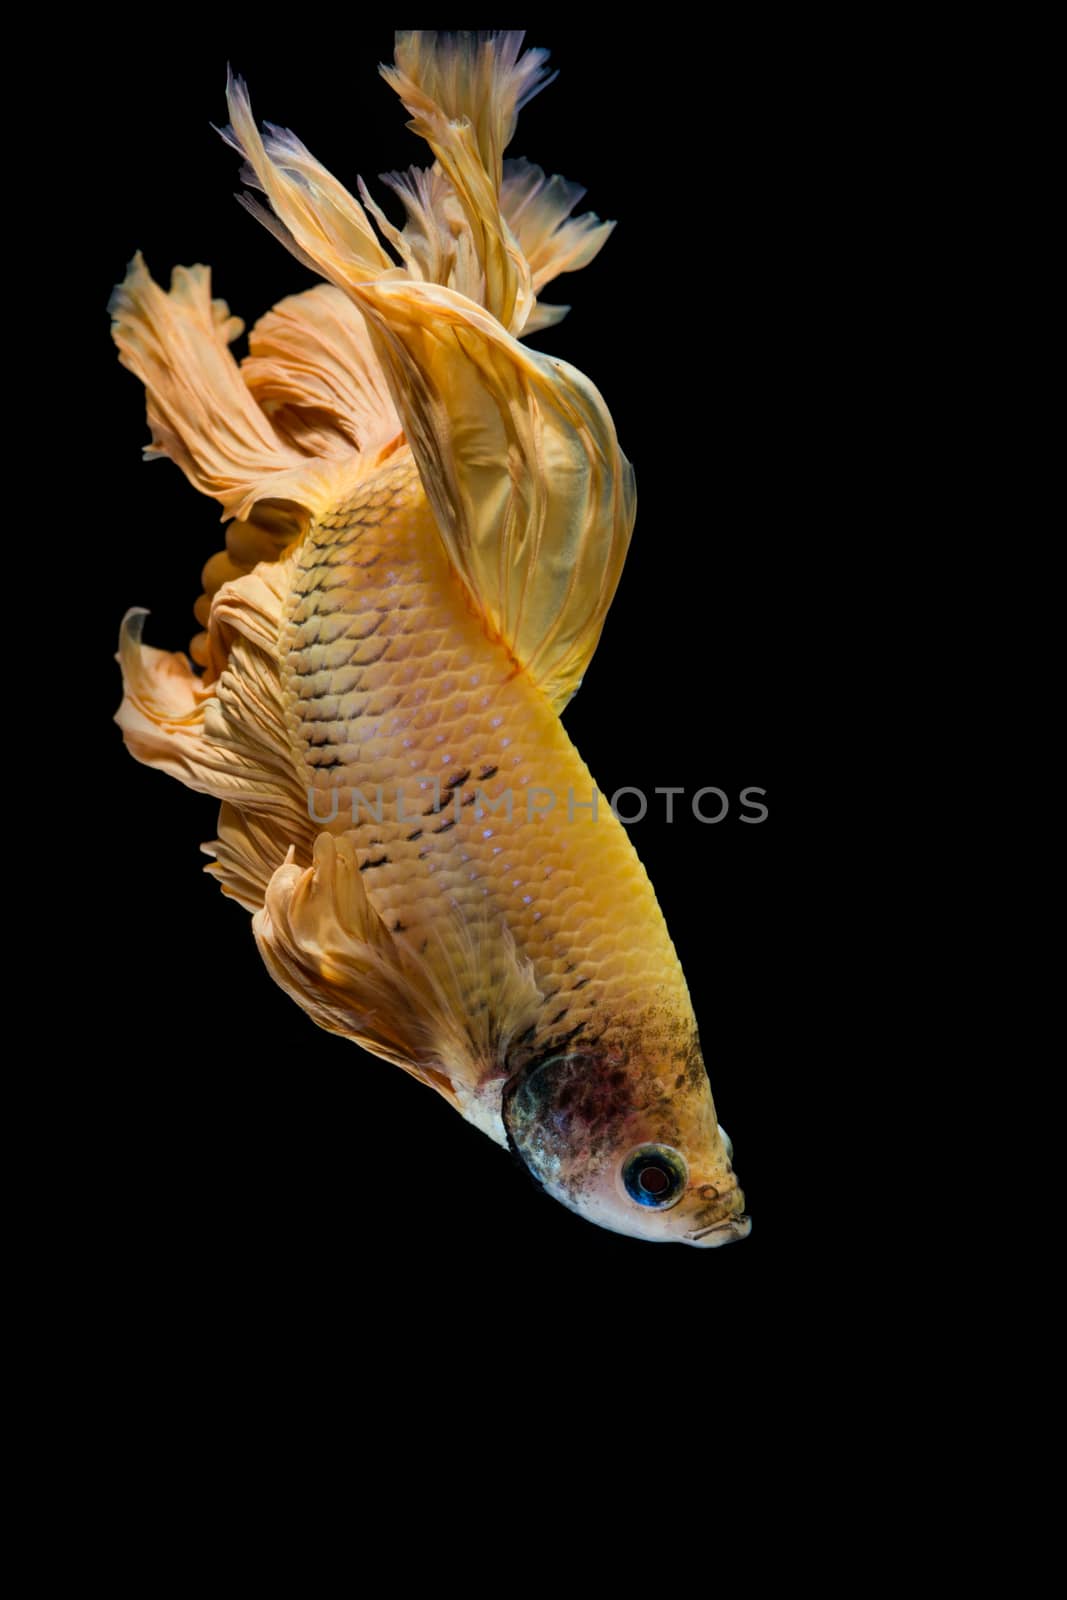 Yellow gold betta fish, siamese fighting fish on black backgroun by yuiyuize